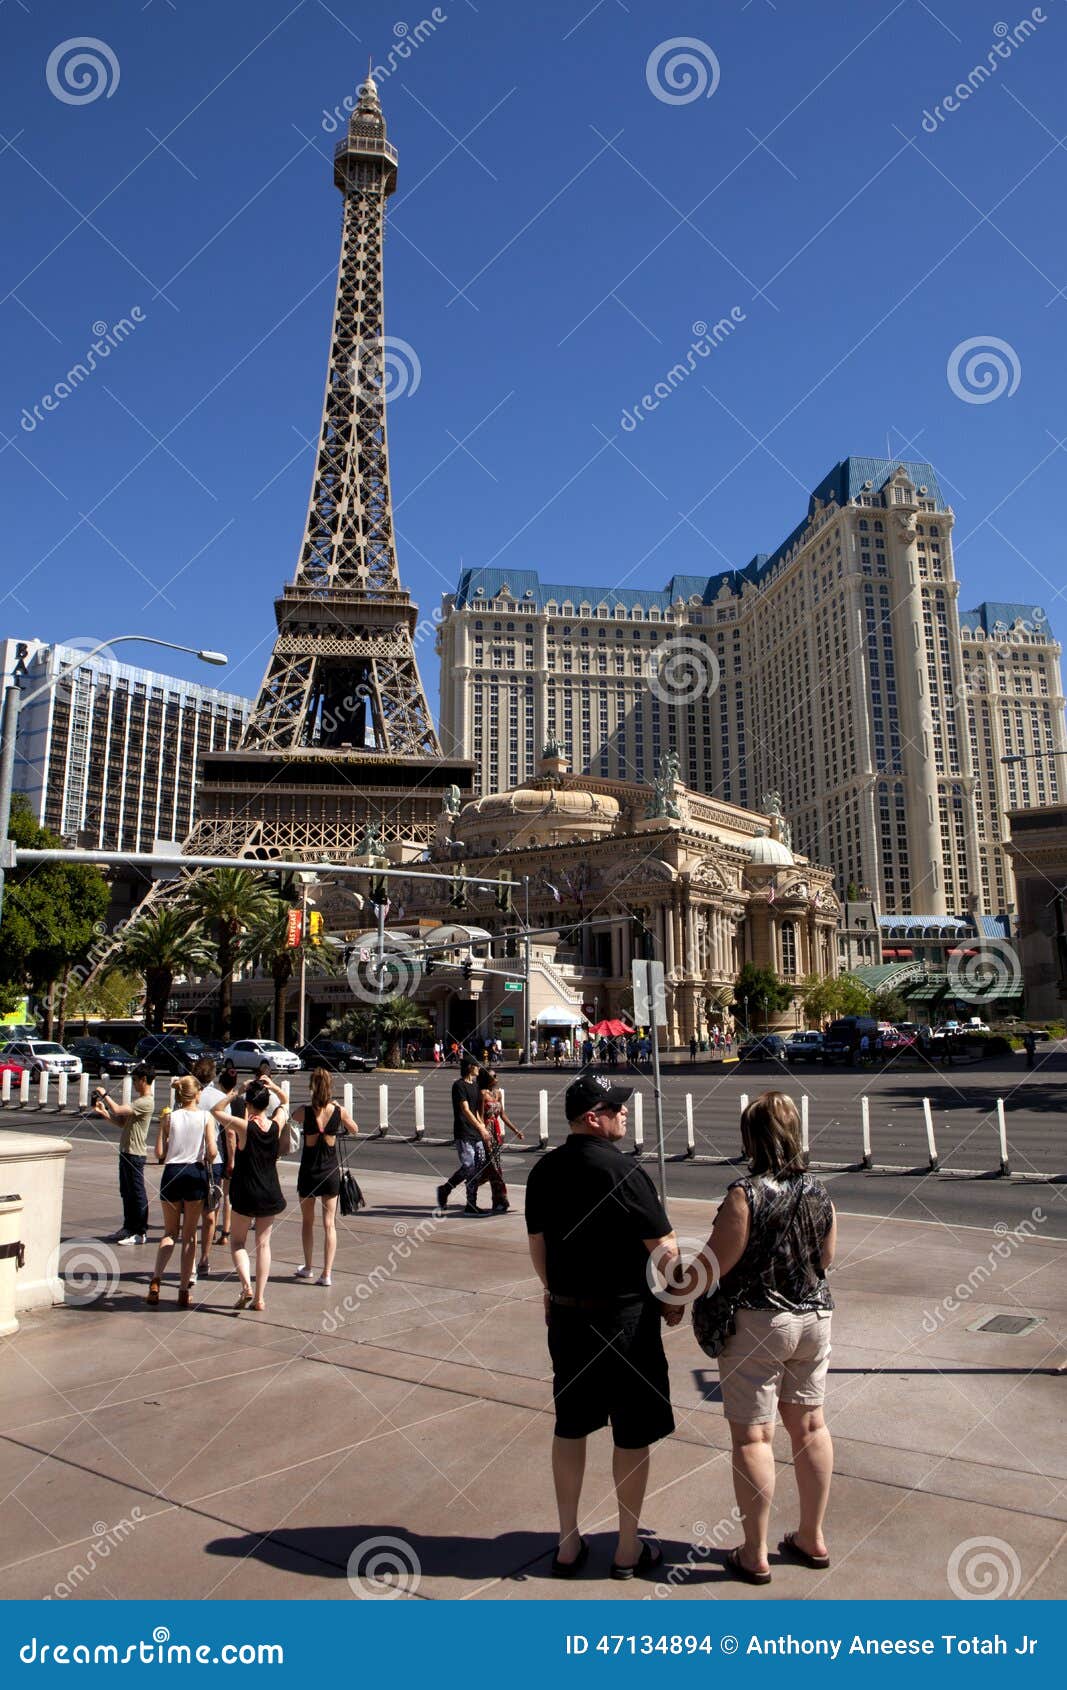 The Paris Las Vegas hotel and casino, replica of the Eiffel Tower